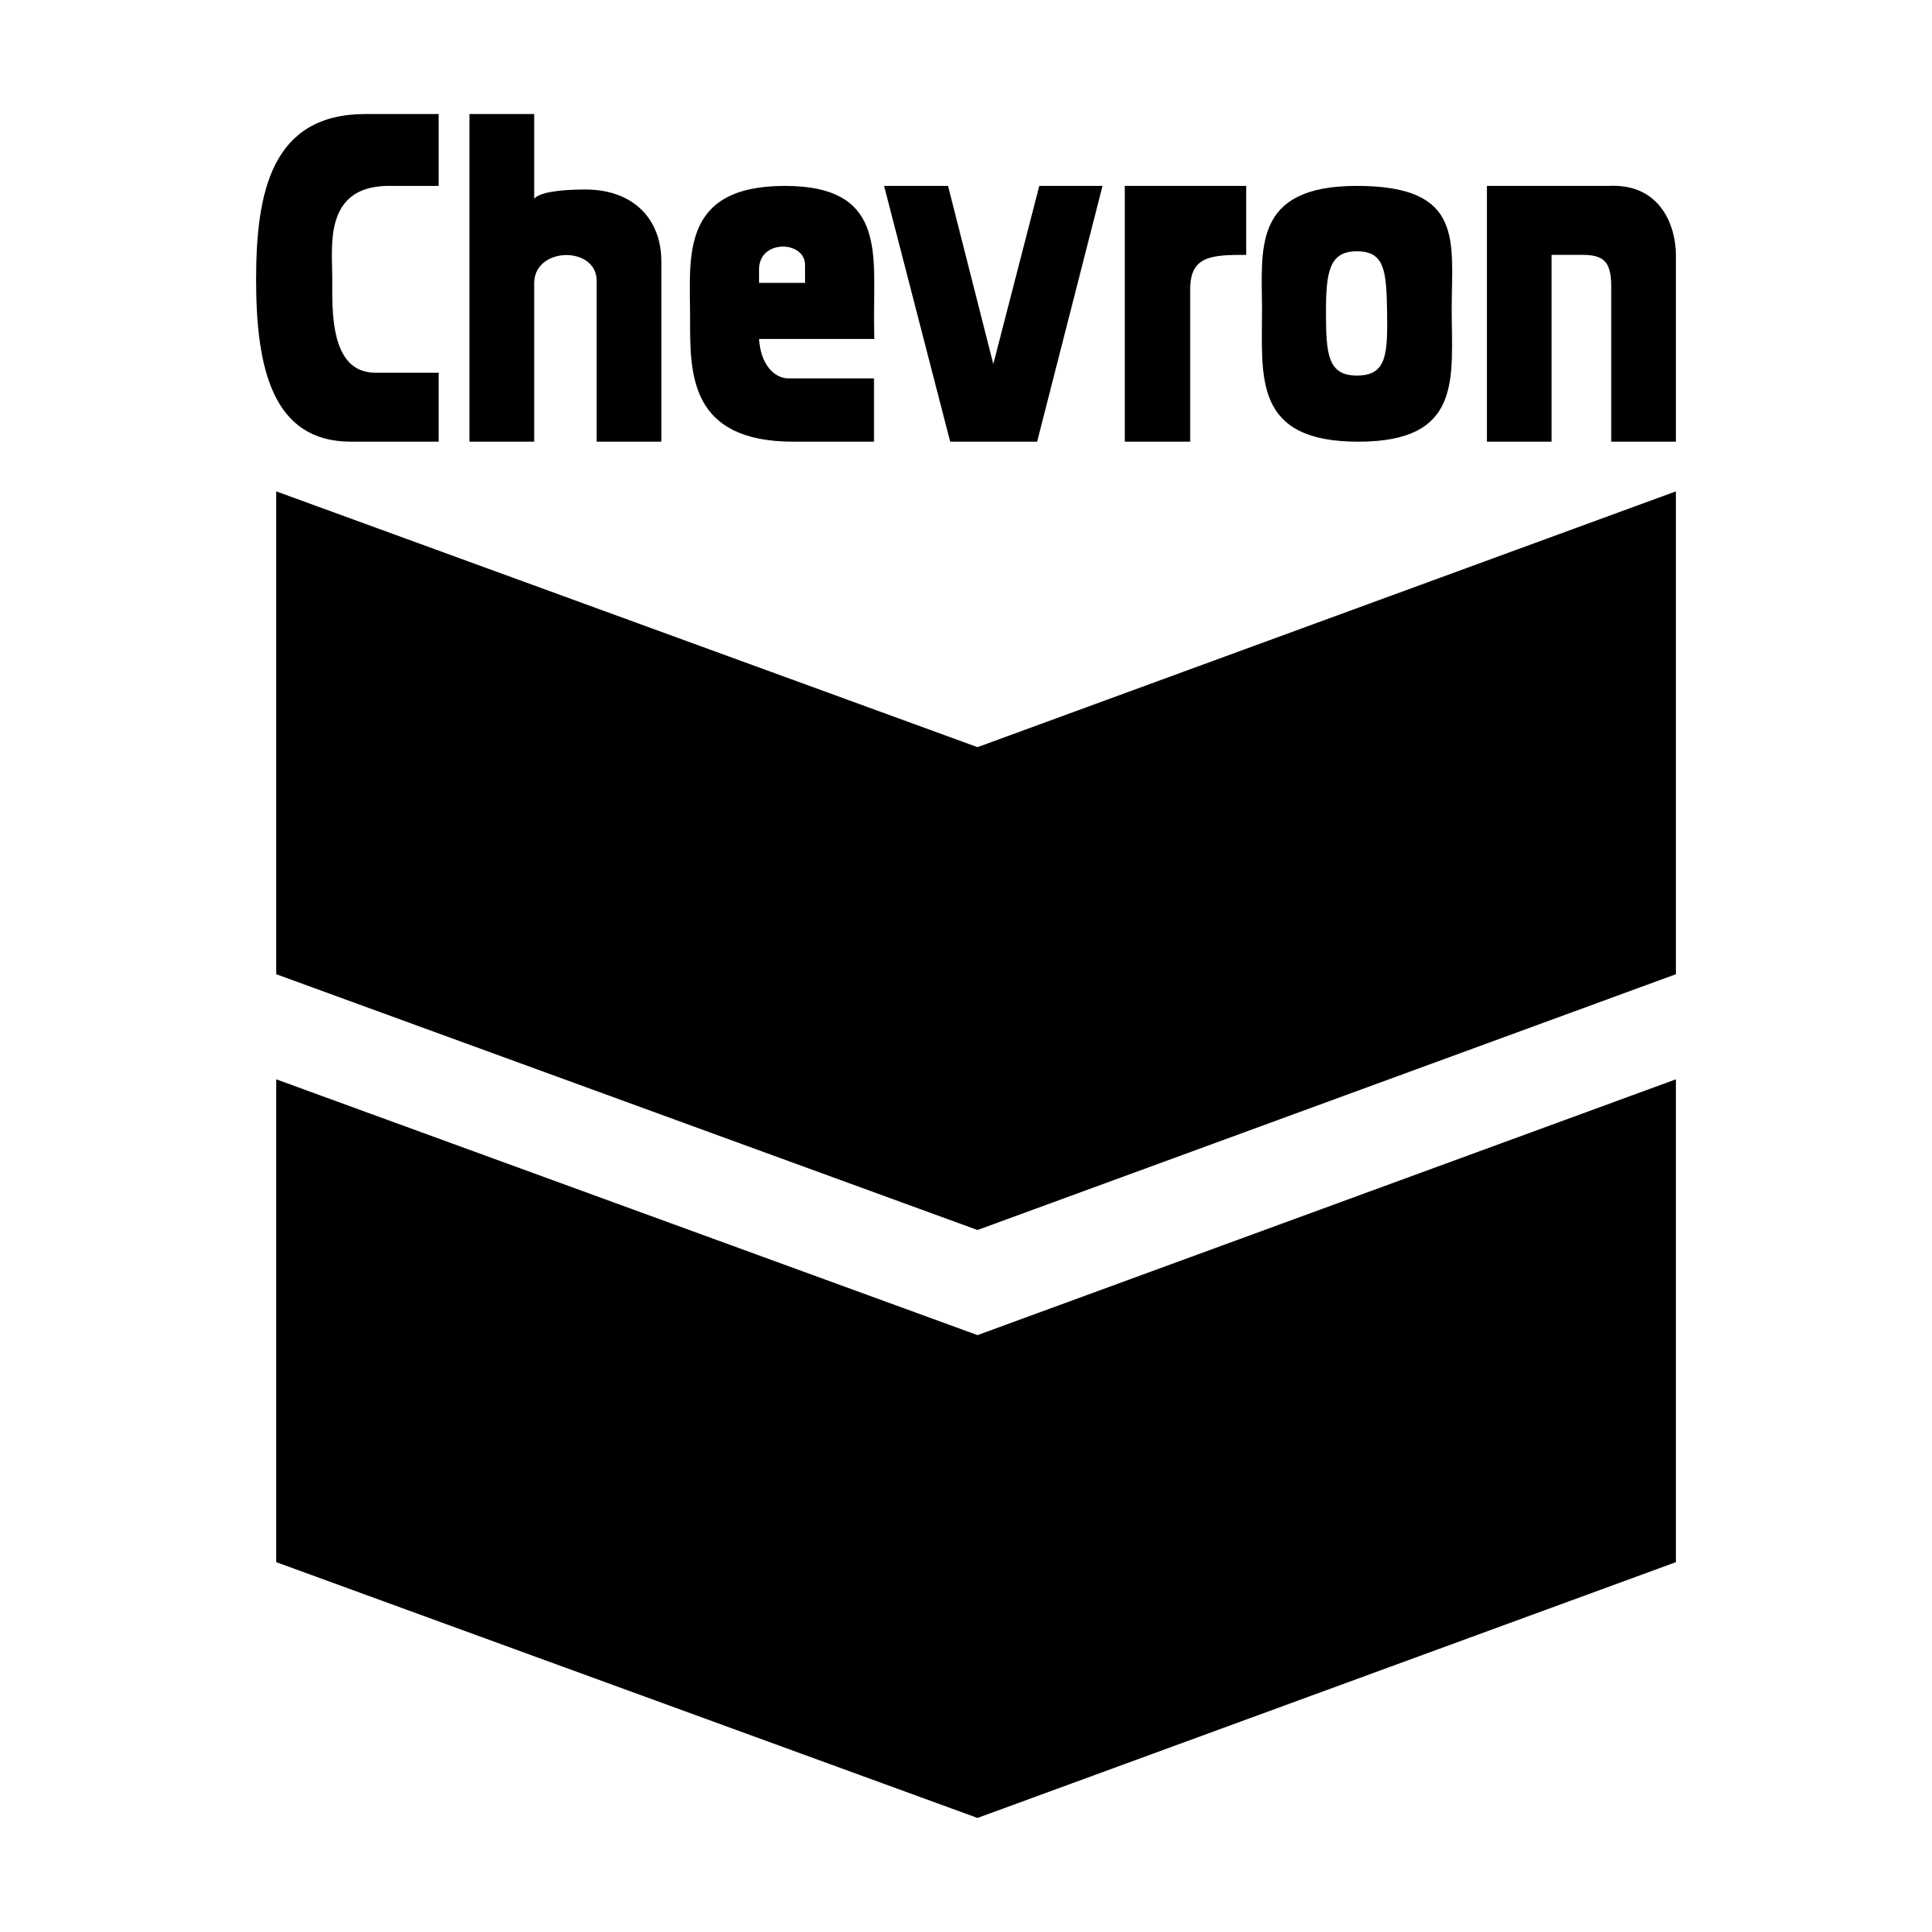 And White Black Chevronlogo Logo - Chevron Logo PNG Transparent & SVG Vector